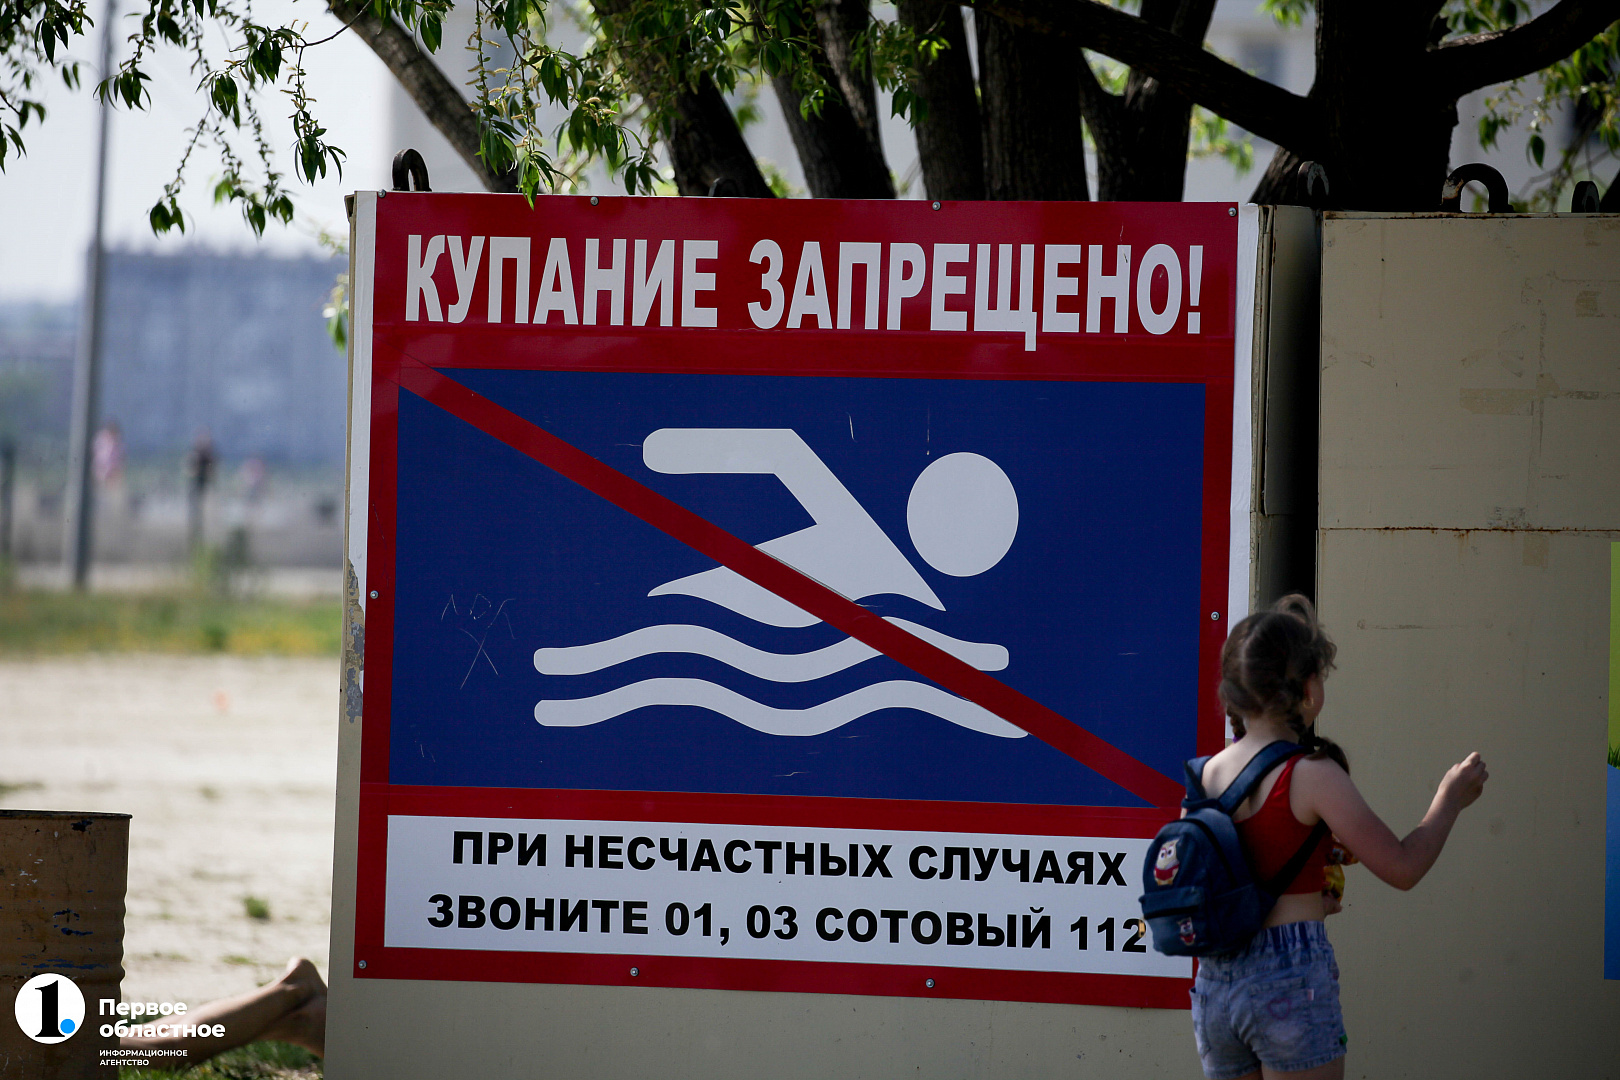 купание запрещено.jpg